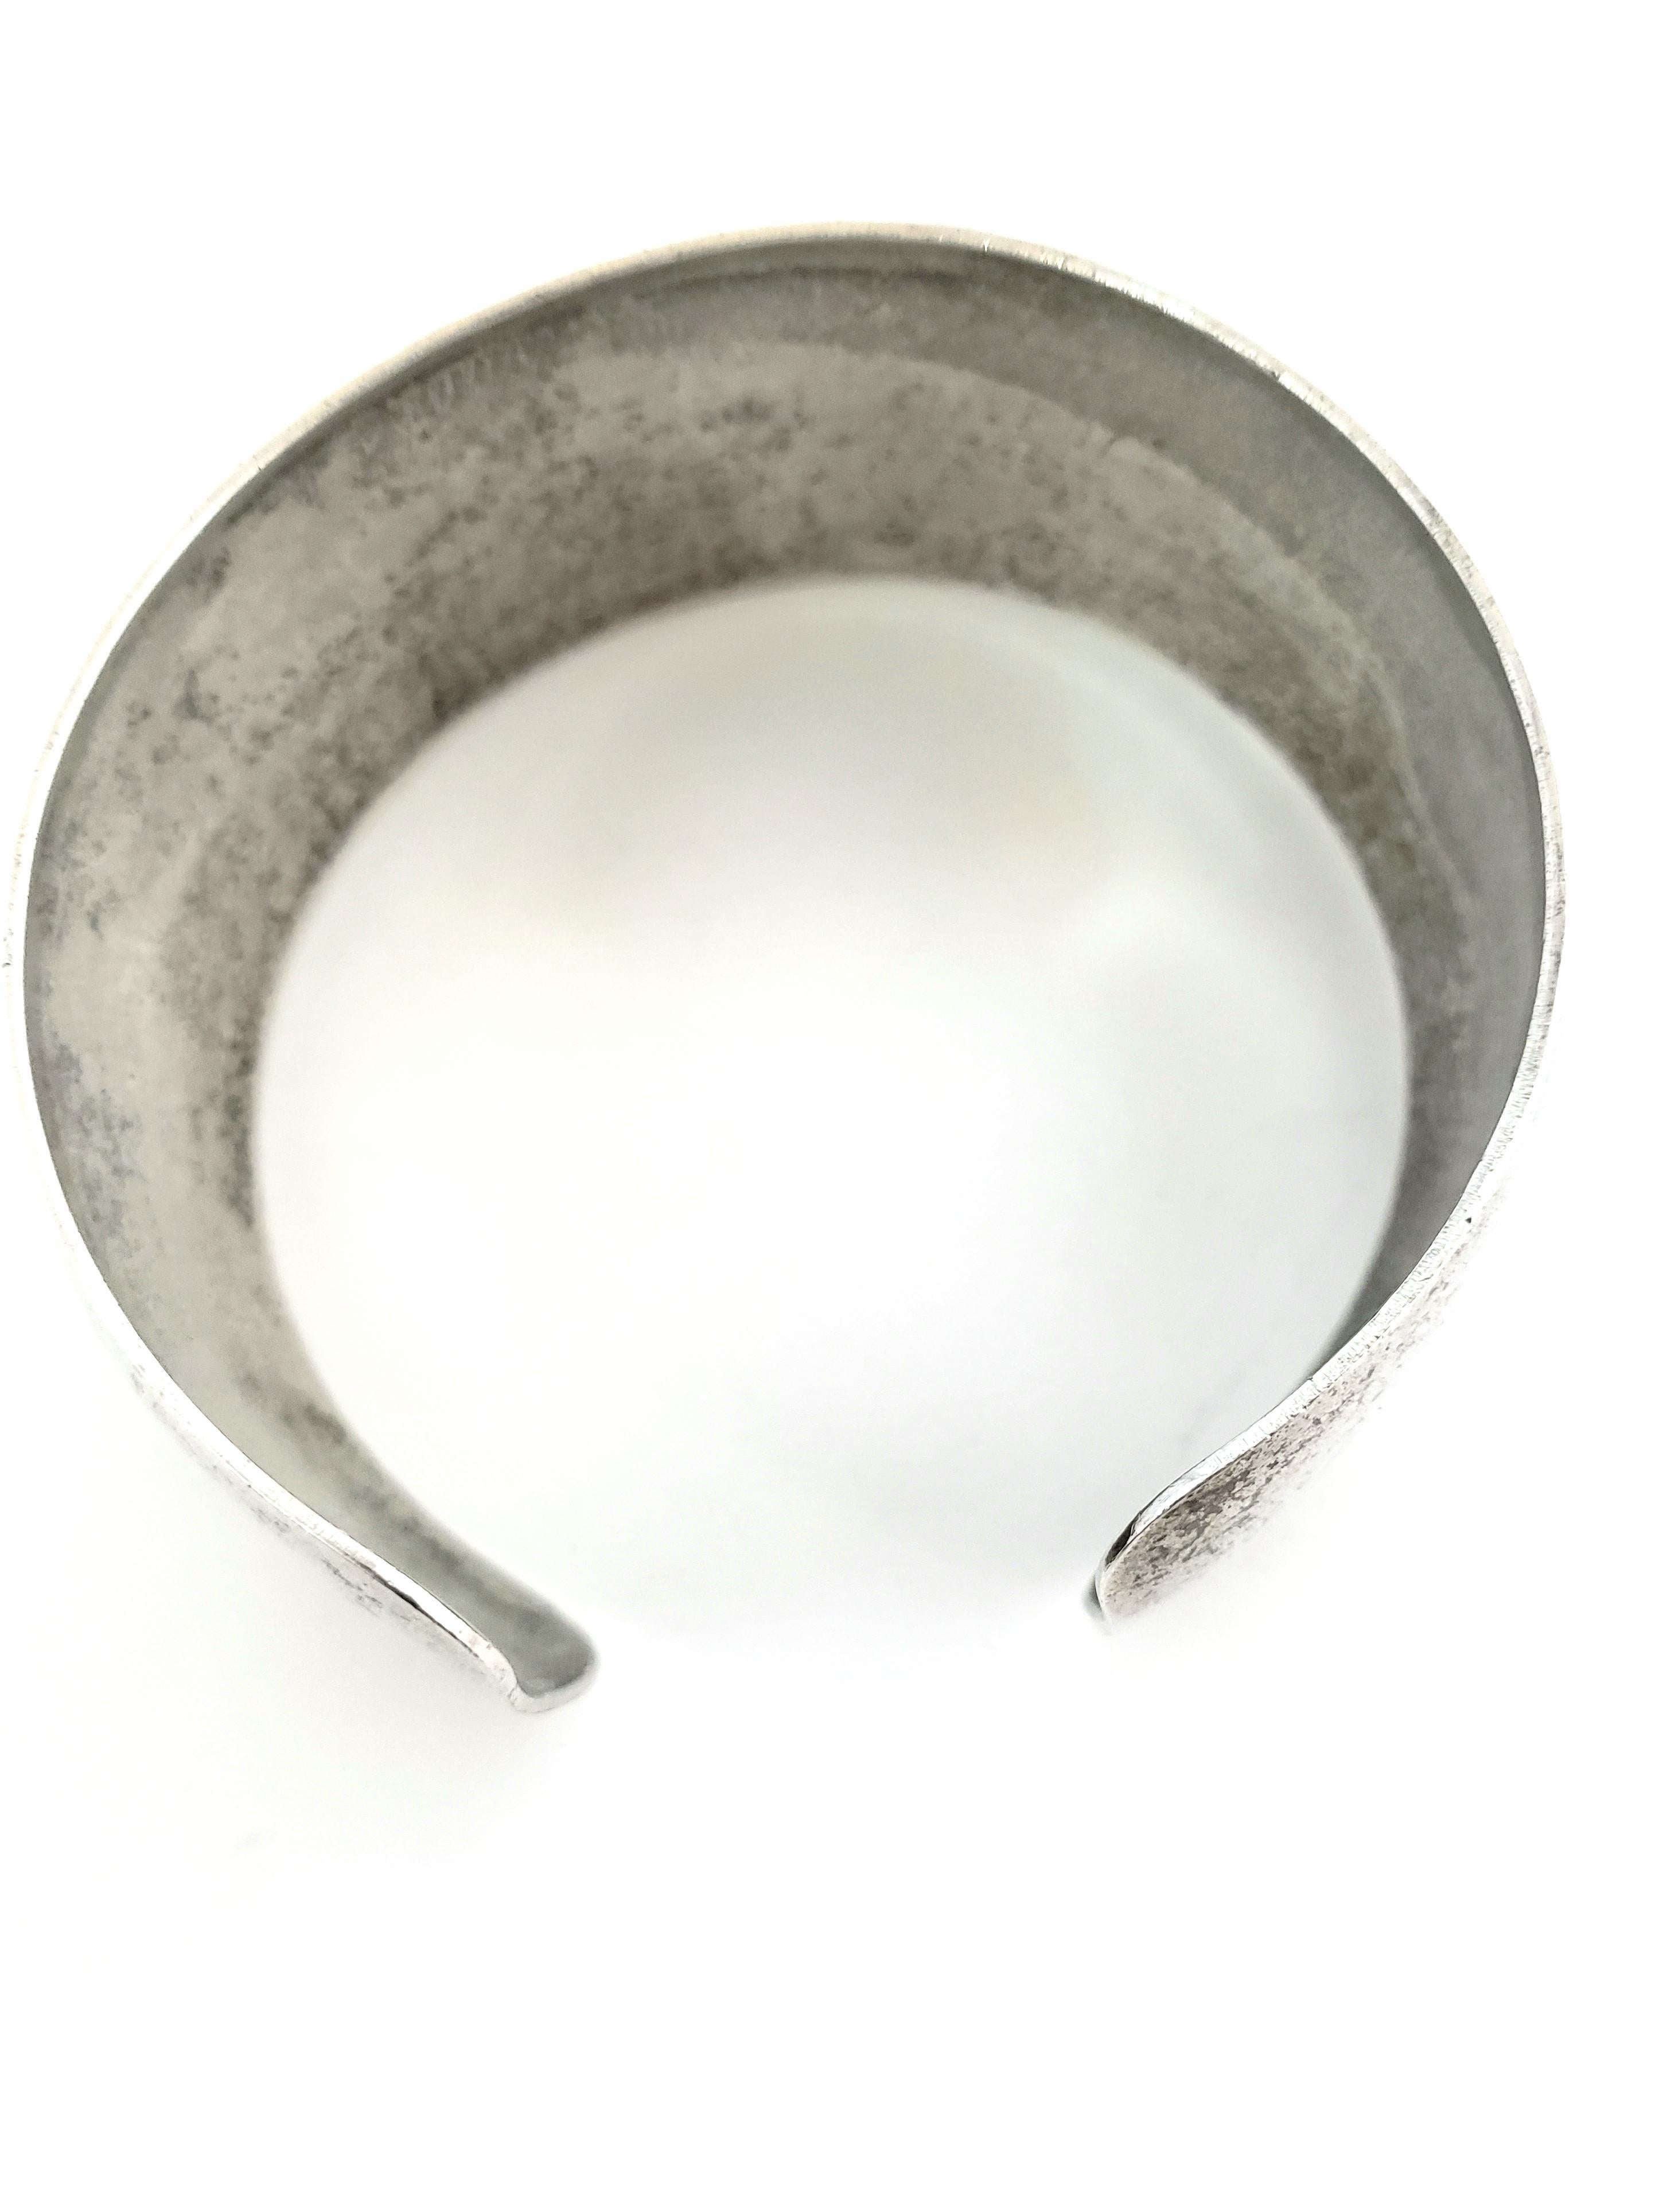 Inman Sterling Silver Modernist Cuff Bracelet 2